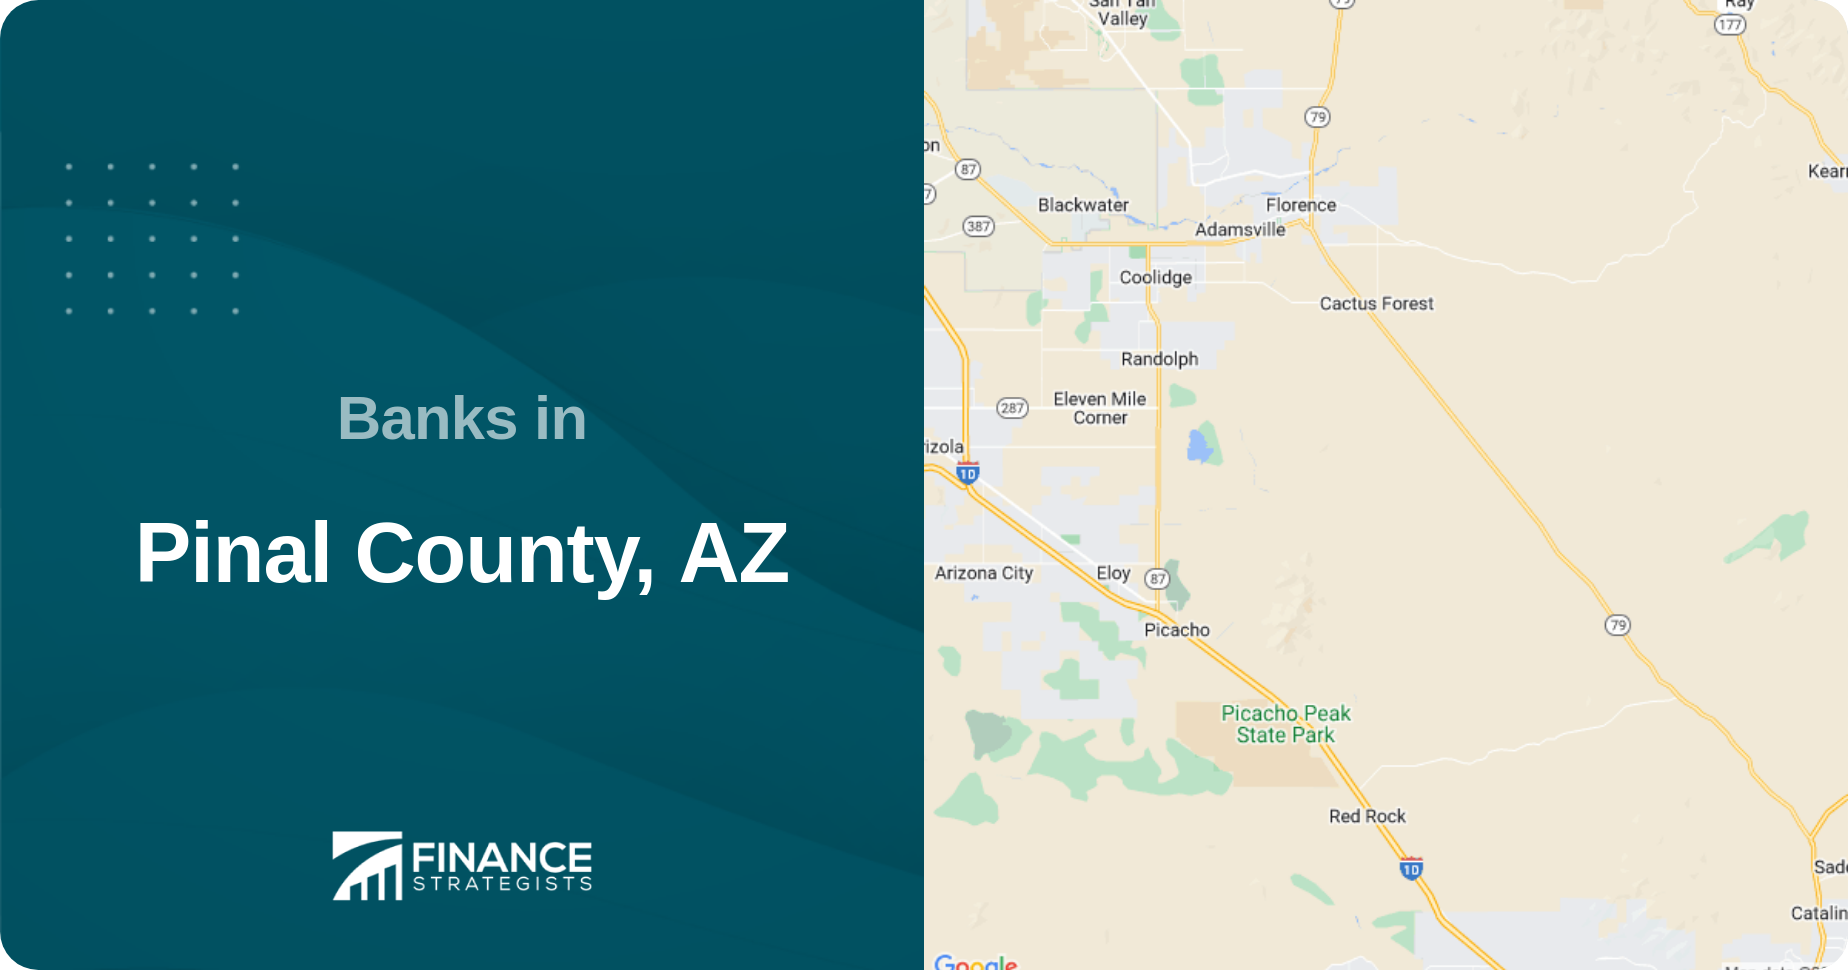 Banks in Pinal County, AZ